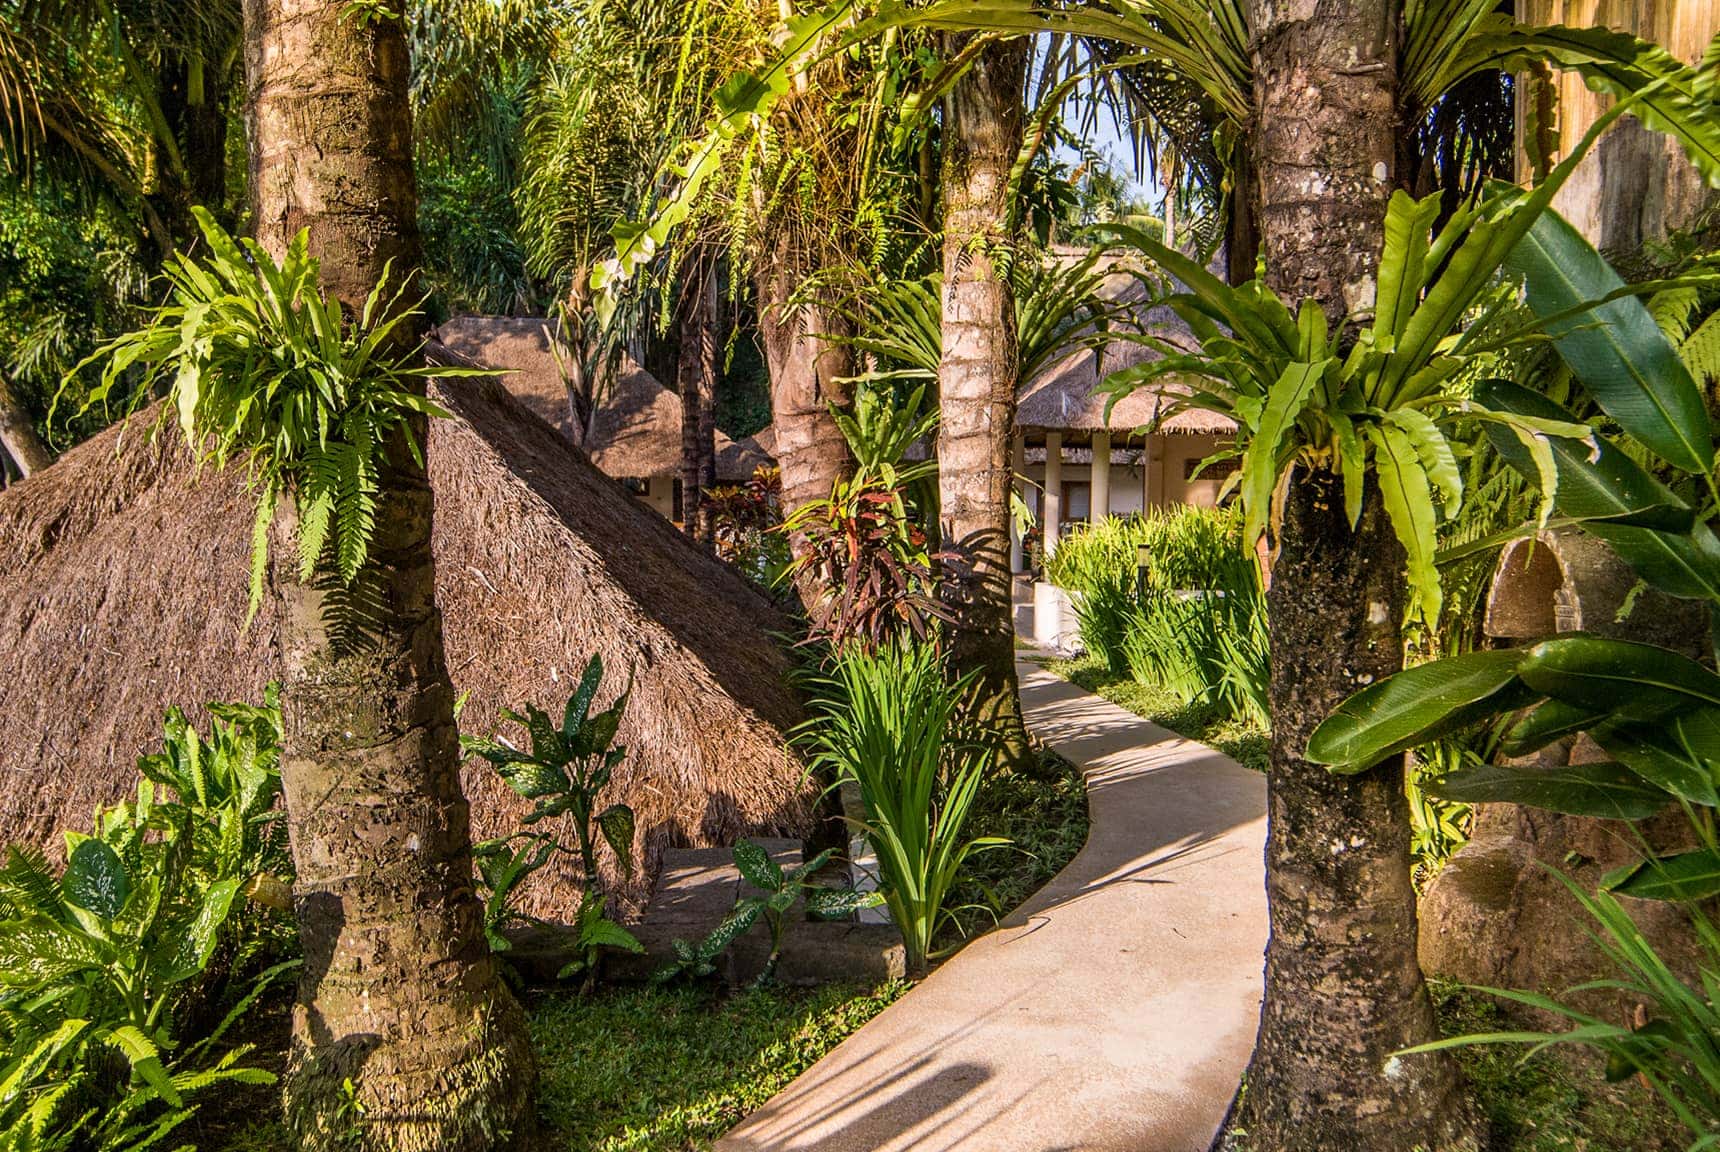 Villa Kembali - Canggu, Bali Indonesia (Bali villa photography by master photographer Rick Carmichael of LuxViz)